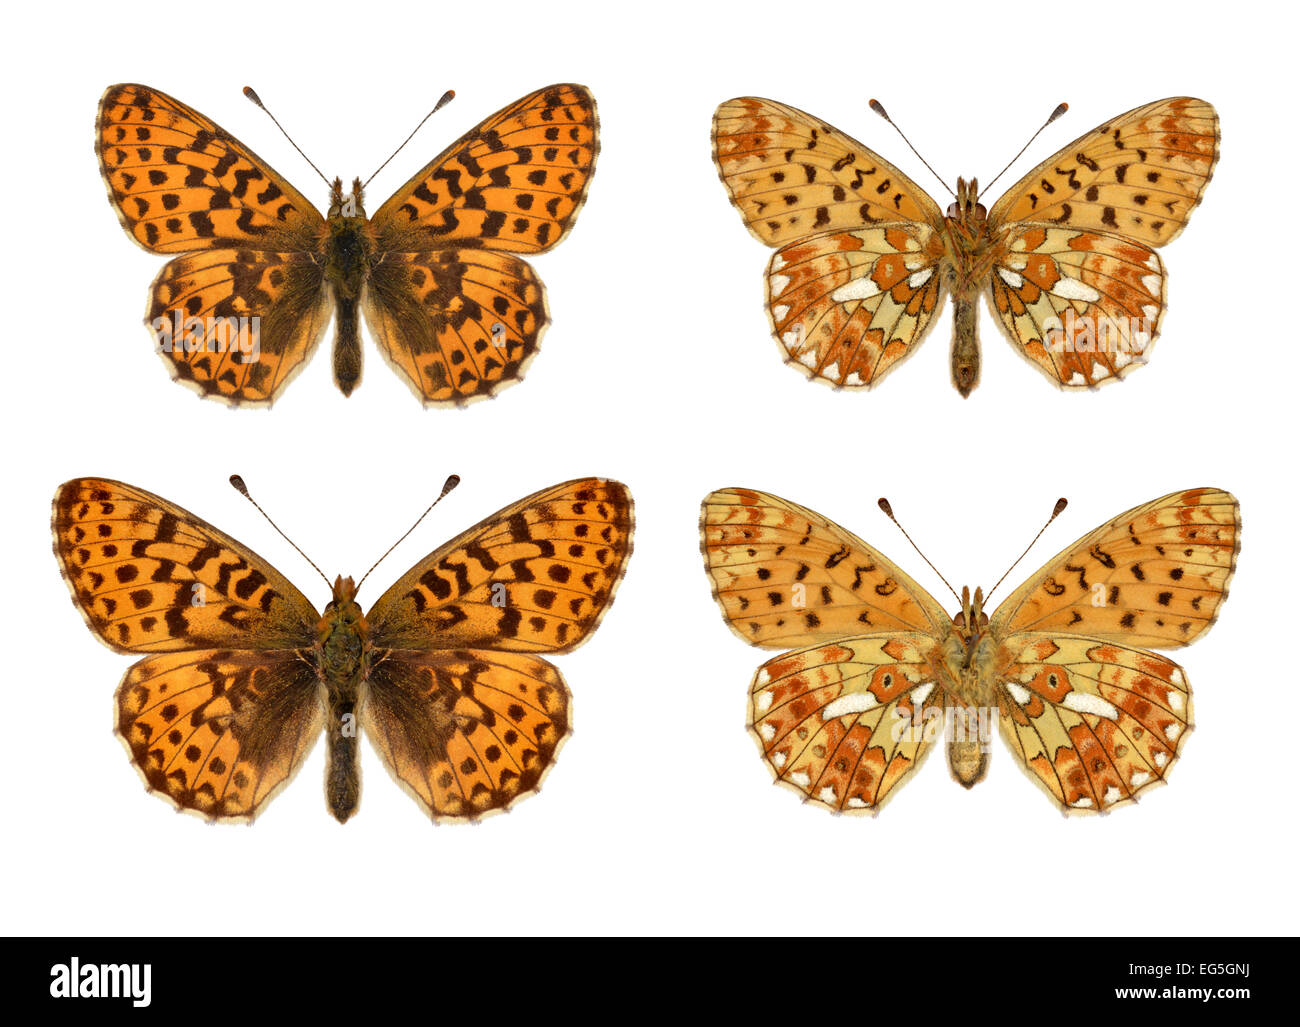 Pearl-bordé Fritillary - Boloria euphrosyne - mâle (rangée du haut) - femelle (rangée du bas) Banque D'Images